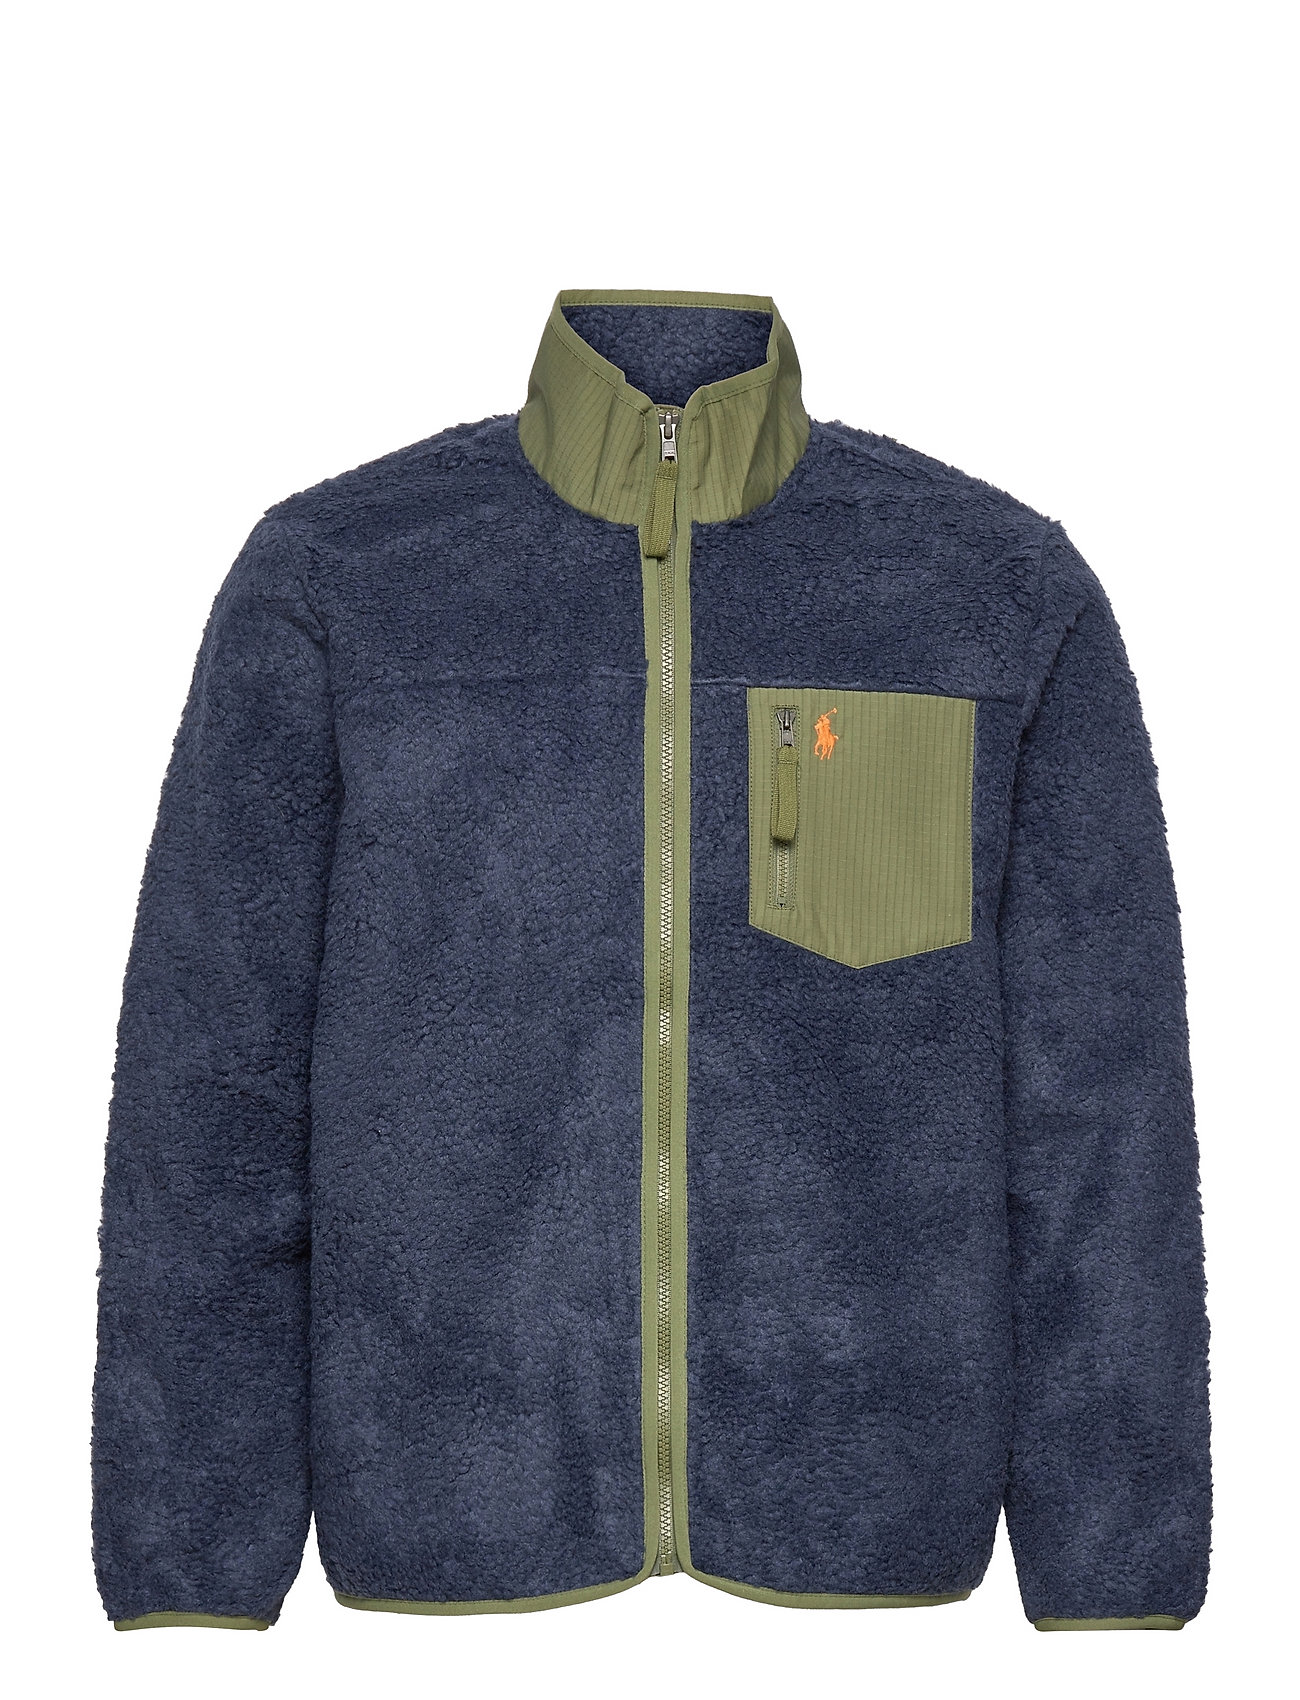 Polo Ralph Lauren Hybrid Fleece Jacket - Mid layer jackets 